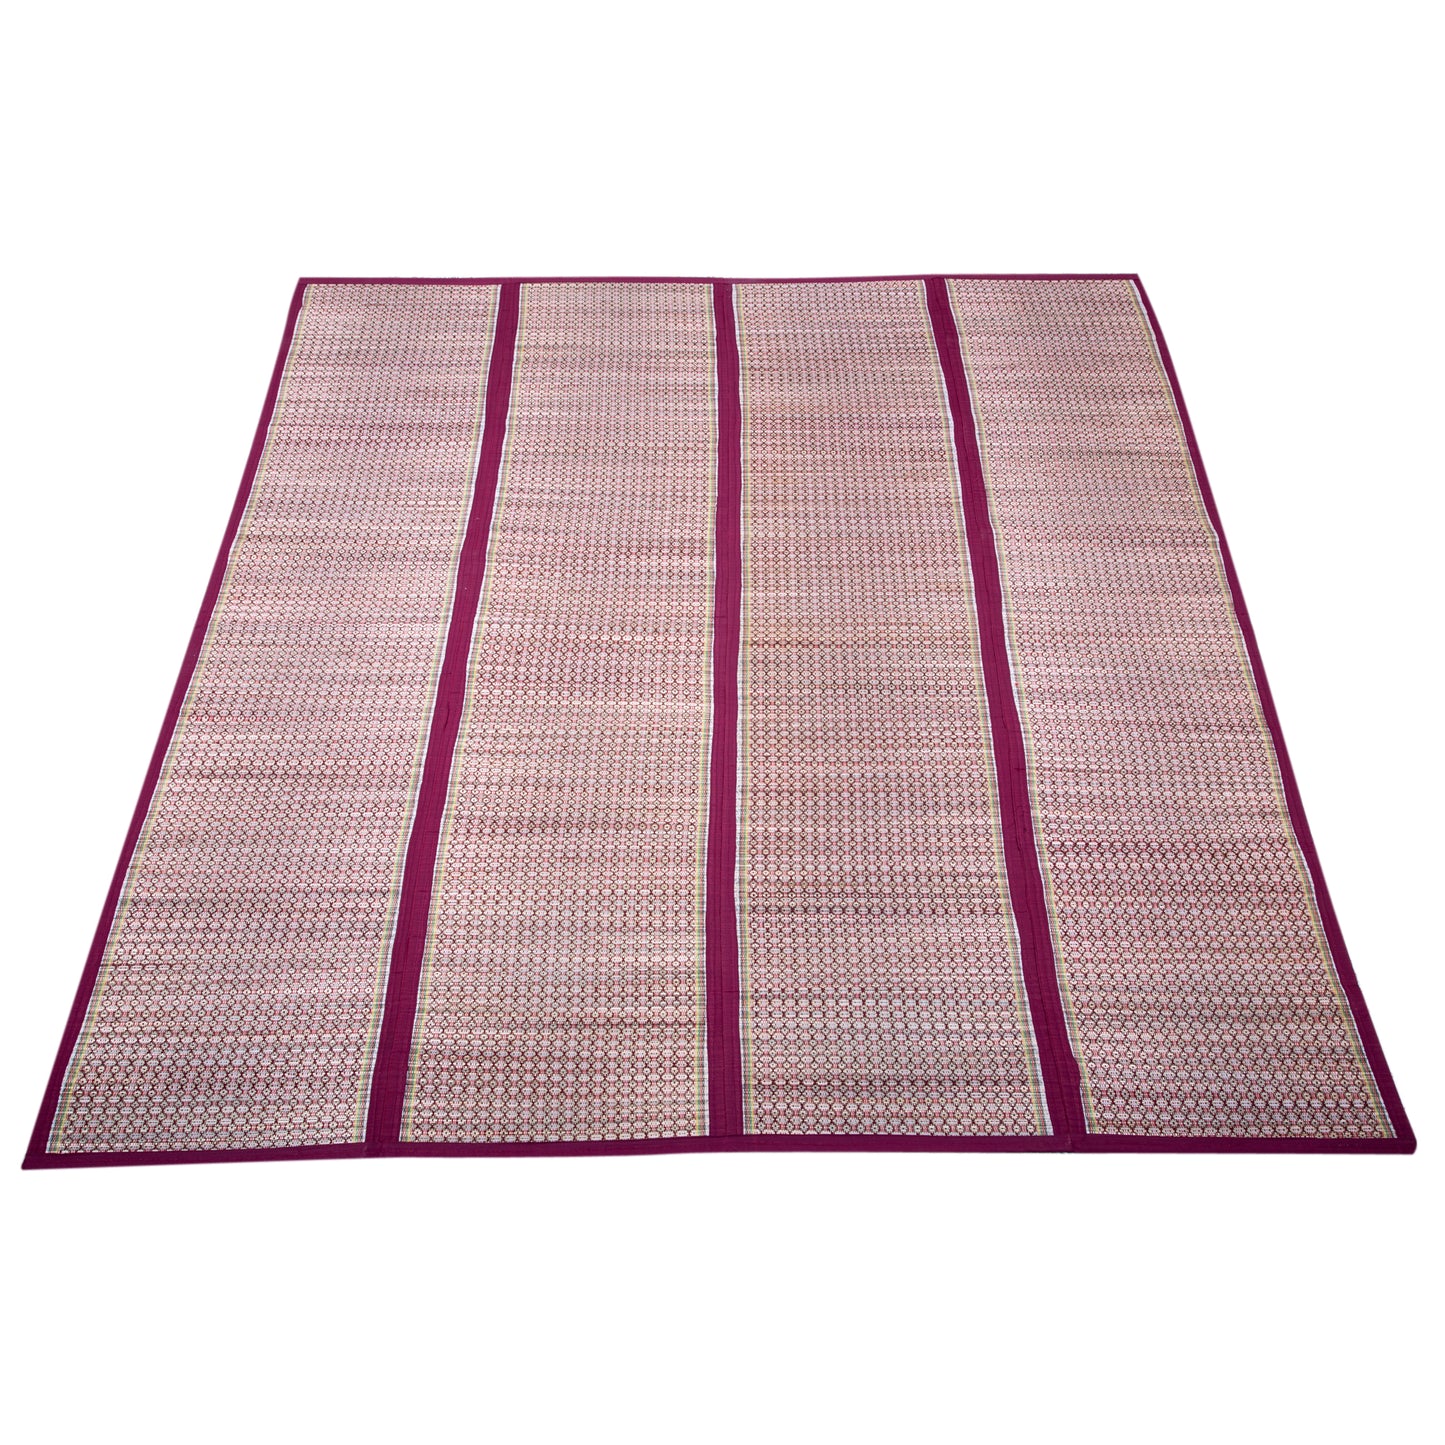 Designer Organic Chatai Mat Foldable made of Madurkathi Grass for Sleeping, Sitting on Floor - T3-38